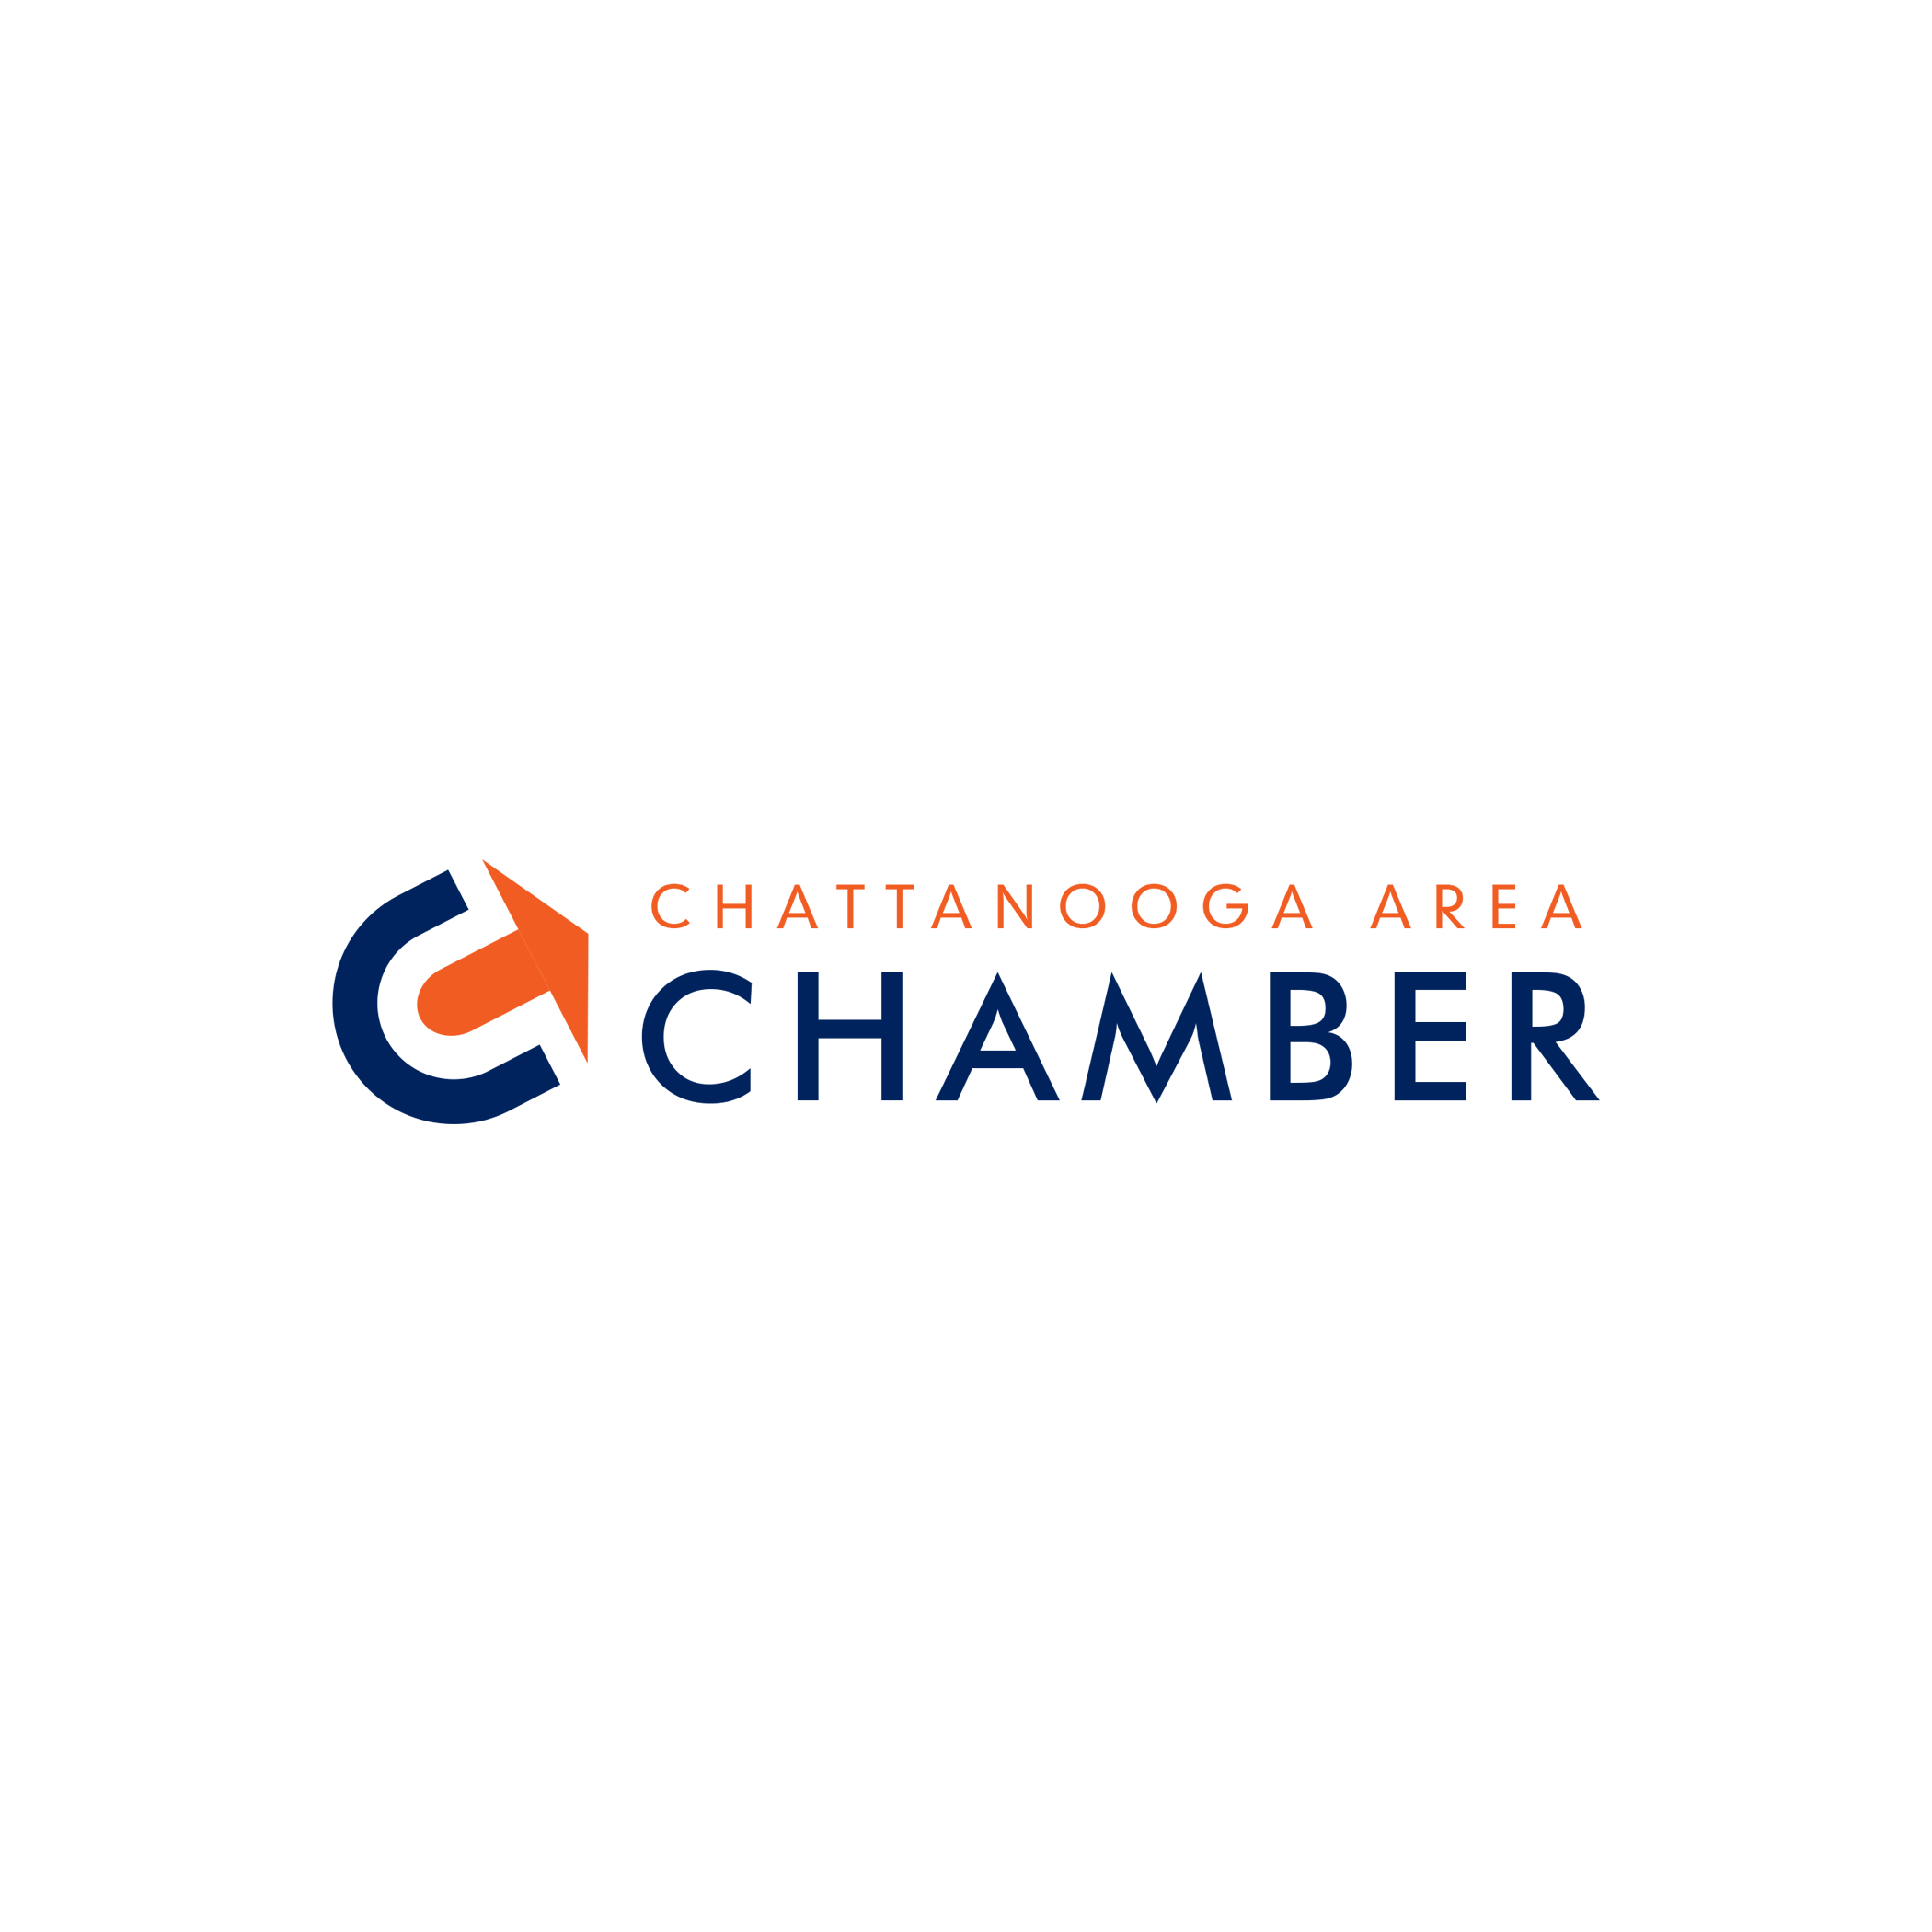 Chattanooga Chamber.png